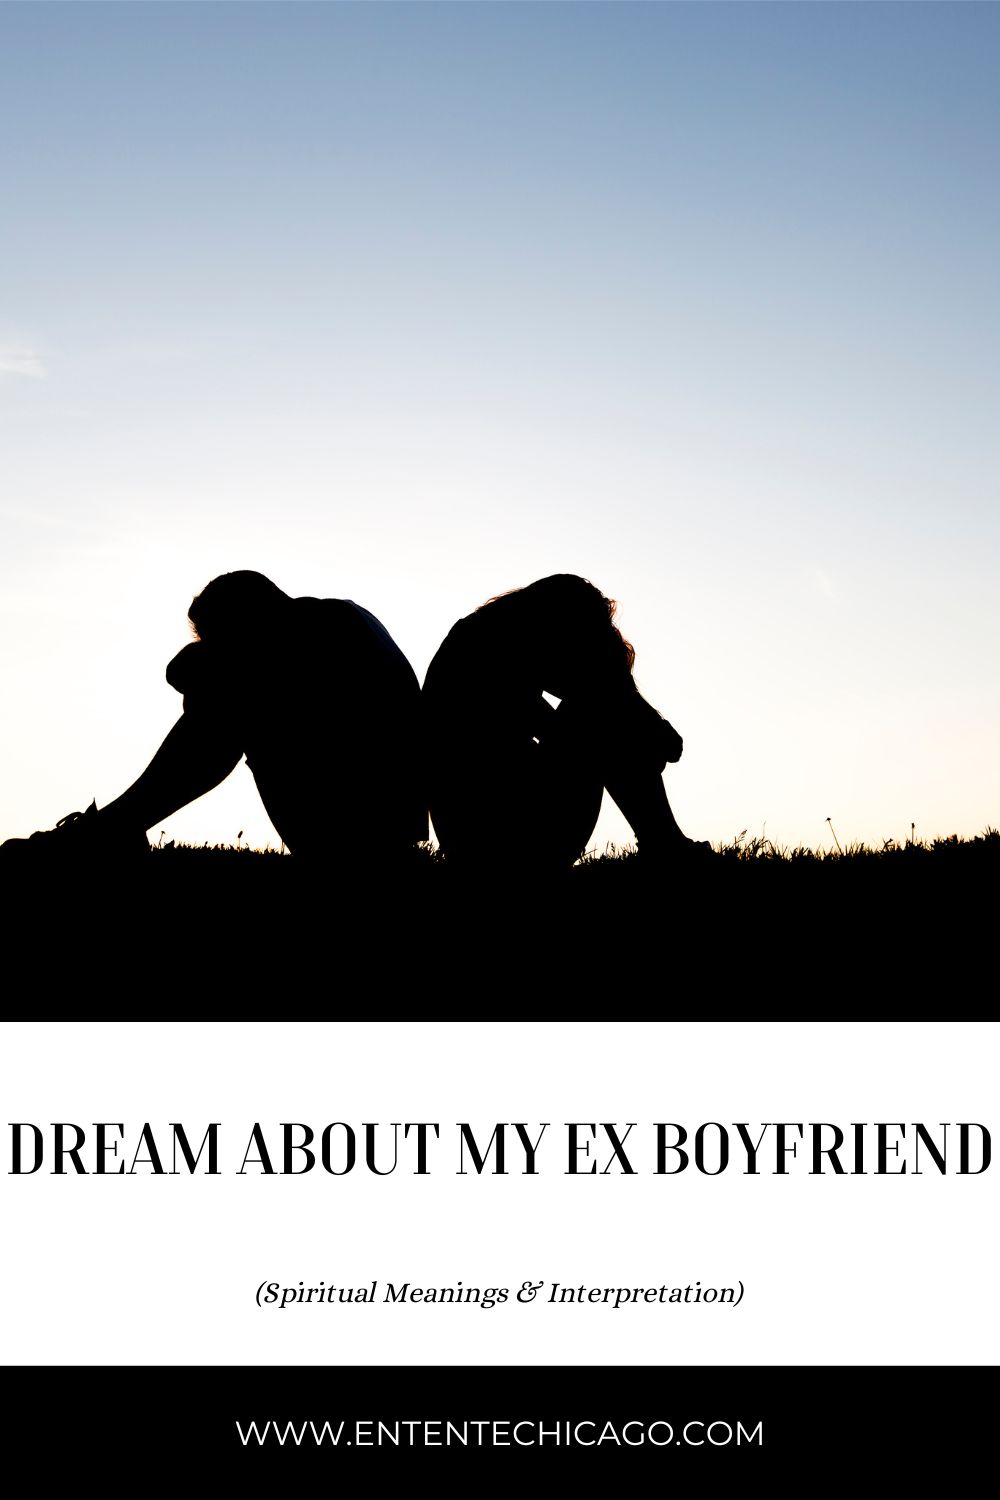 Dream About My Ex Boyfriend (Spiritual Meanings & Interpretation)